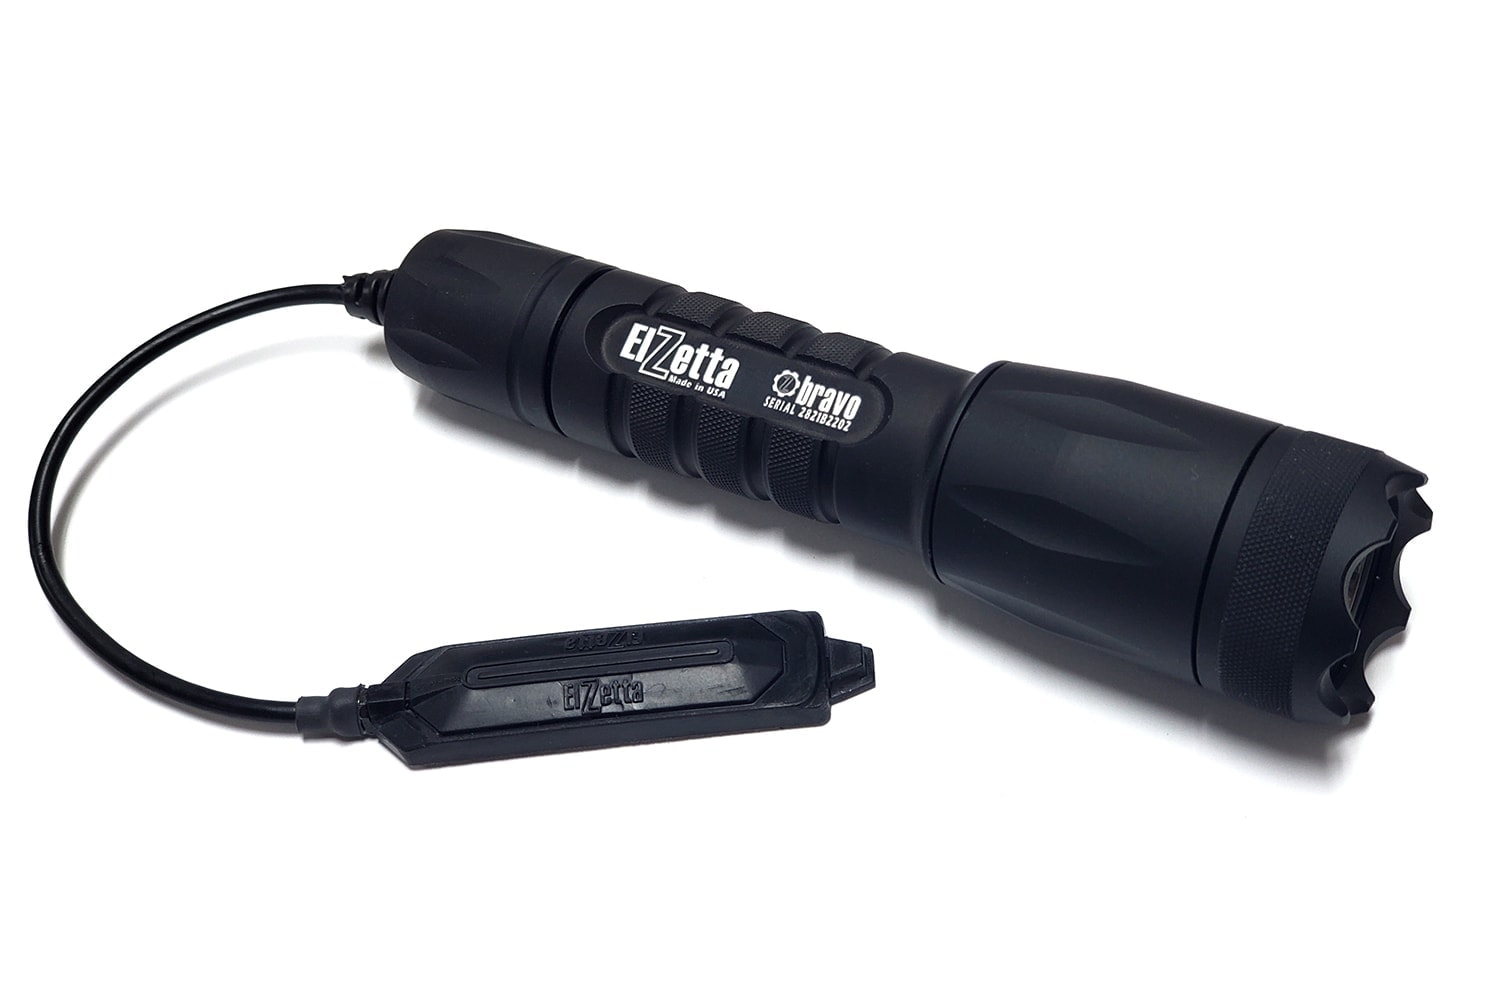 Elzetta Bravo High Candela 2-Cell Flashlight with 5-inch Tape Switch